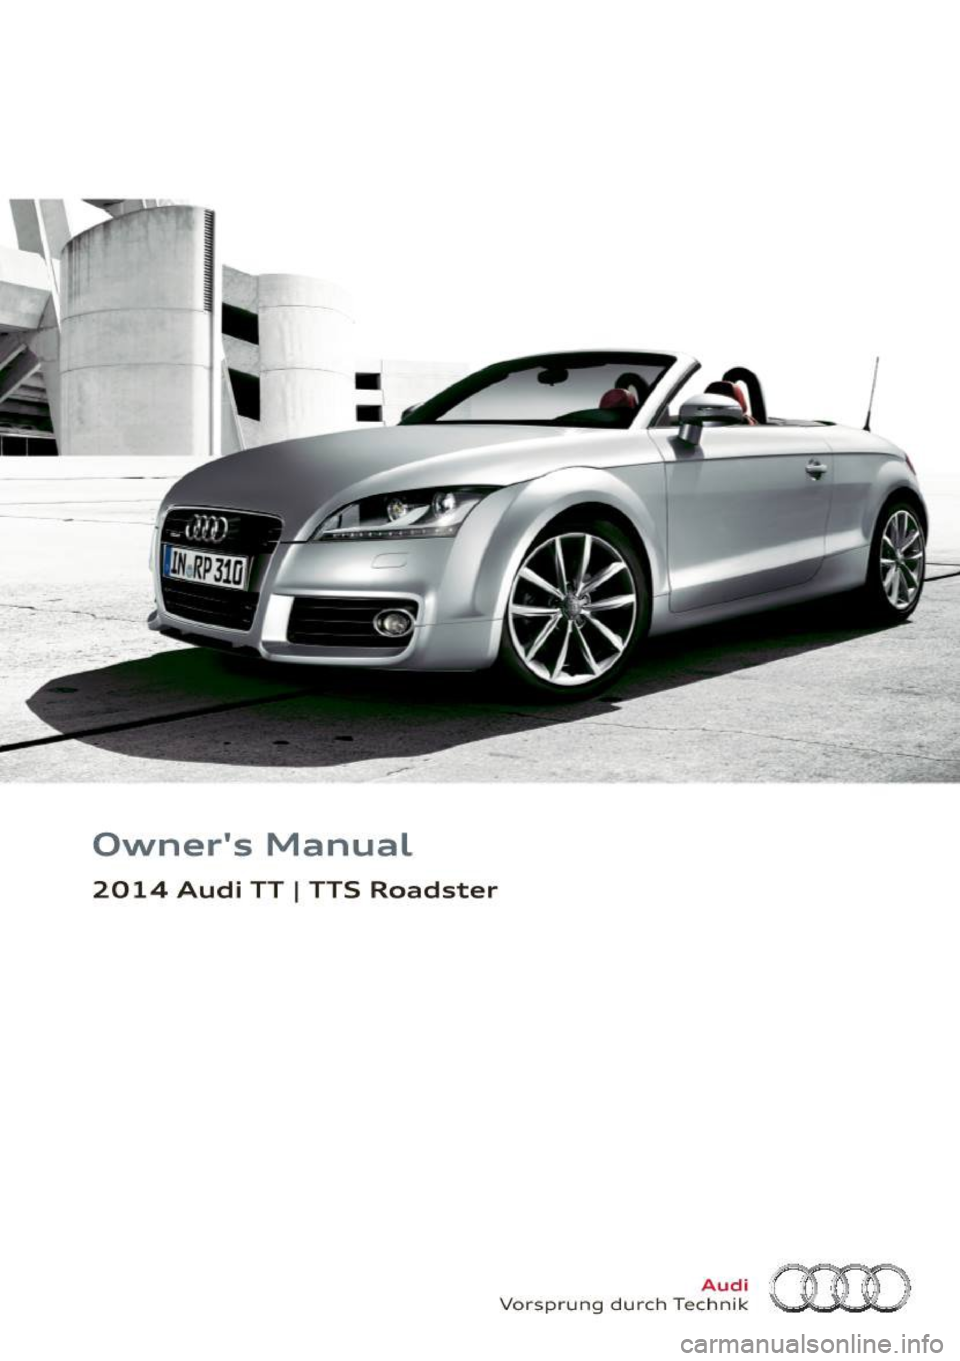 AUDI TT ROADSTER 2014  Owners Manual -­
,-• 
-
Owners  Manual 
2014  Audi  TT I TTS  Roadster 
-- -
Vo rsp rung  du rch  Tec~~f~ (HD  